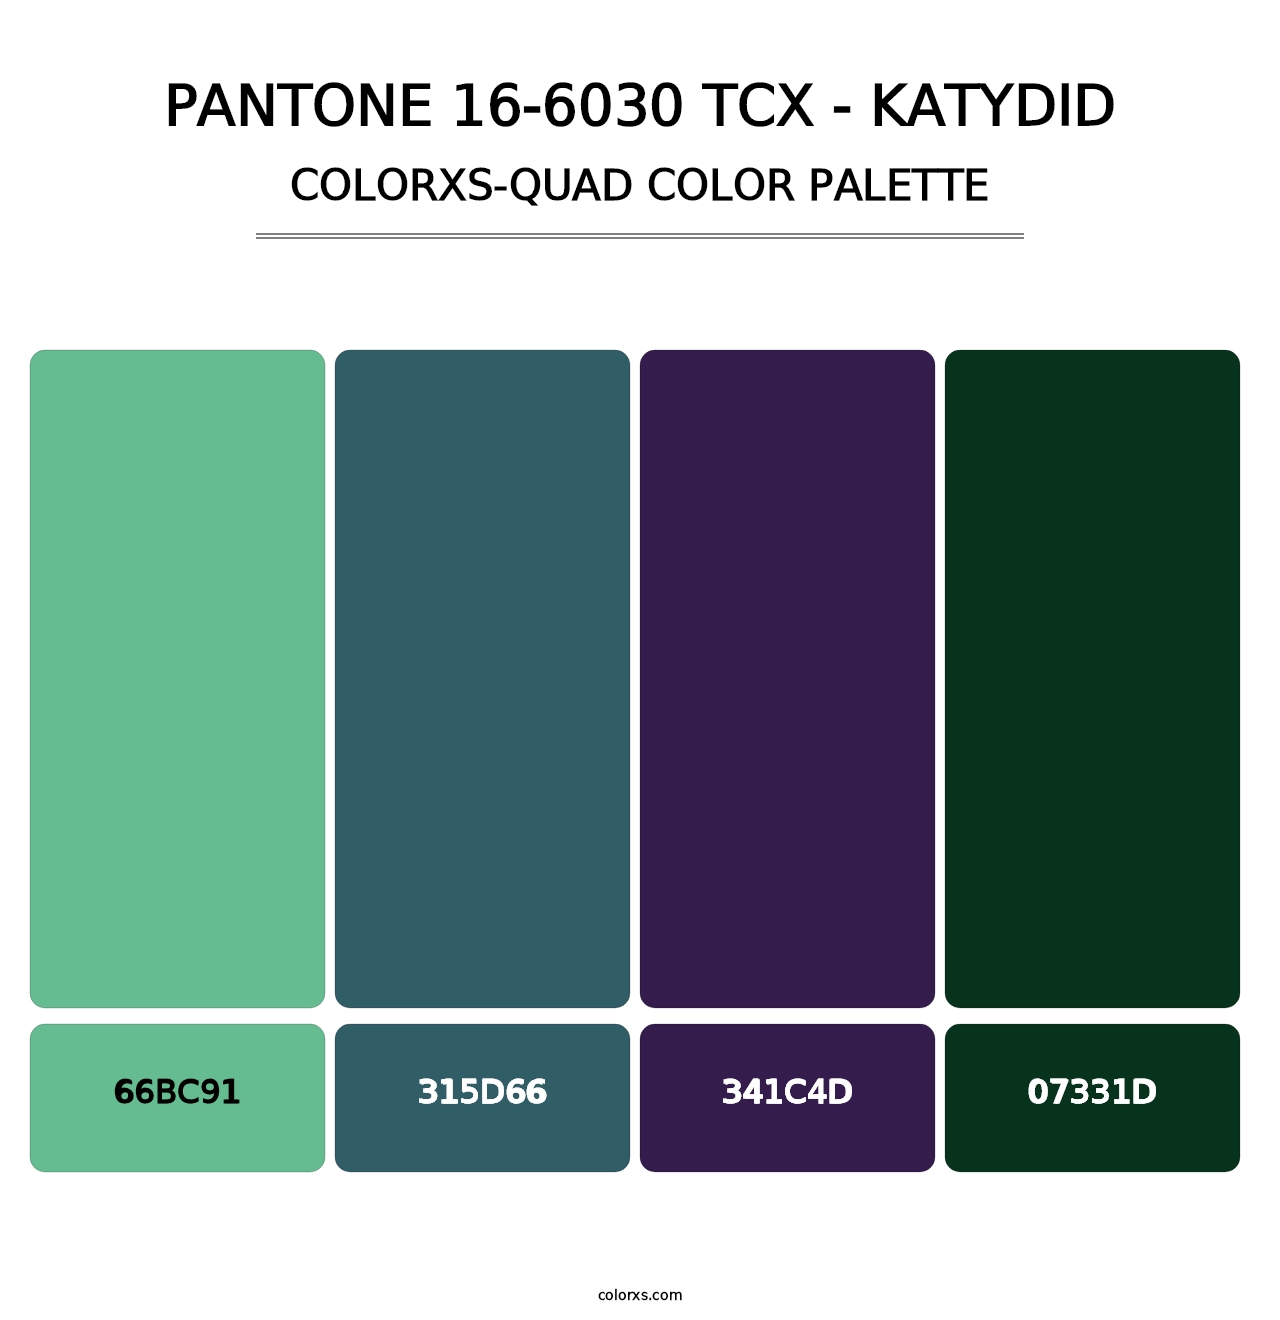 PANTONE 16-6030 TCX - Katydid - Colorxs Quad Palette